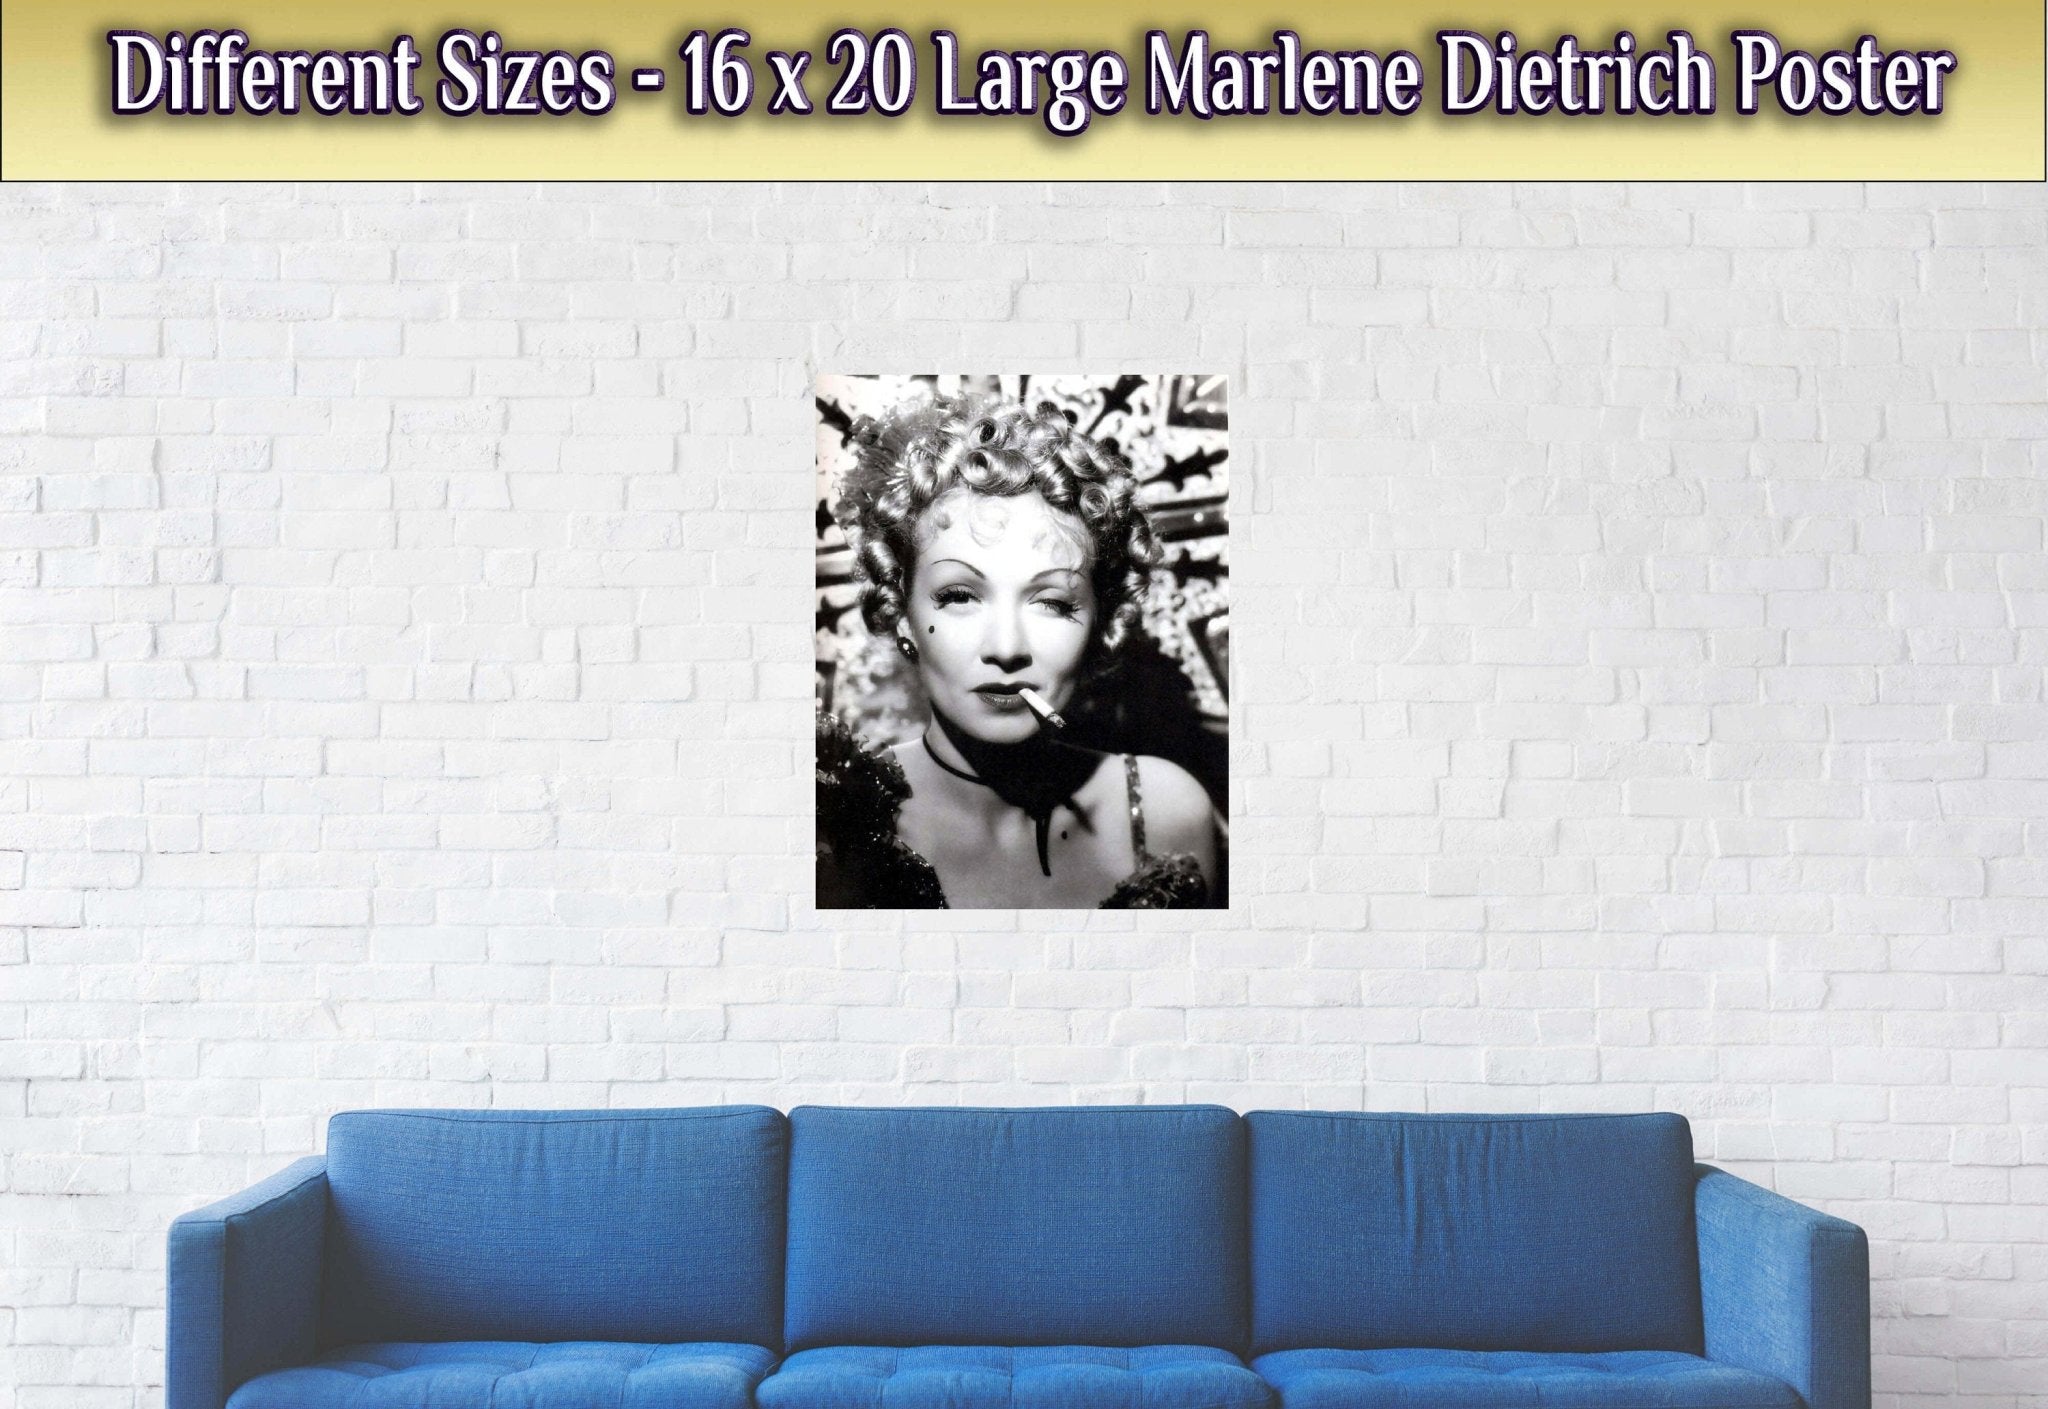 Marlene Dietrich Poster, Caberet Singer, Vintage Photo - Iconic Marlene Dietrich Print - Hollywood Silver Screen Star - WallArtPrints4U